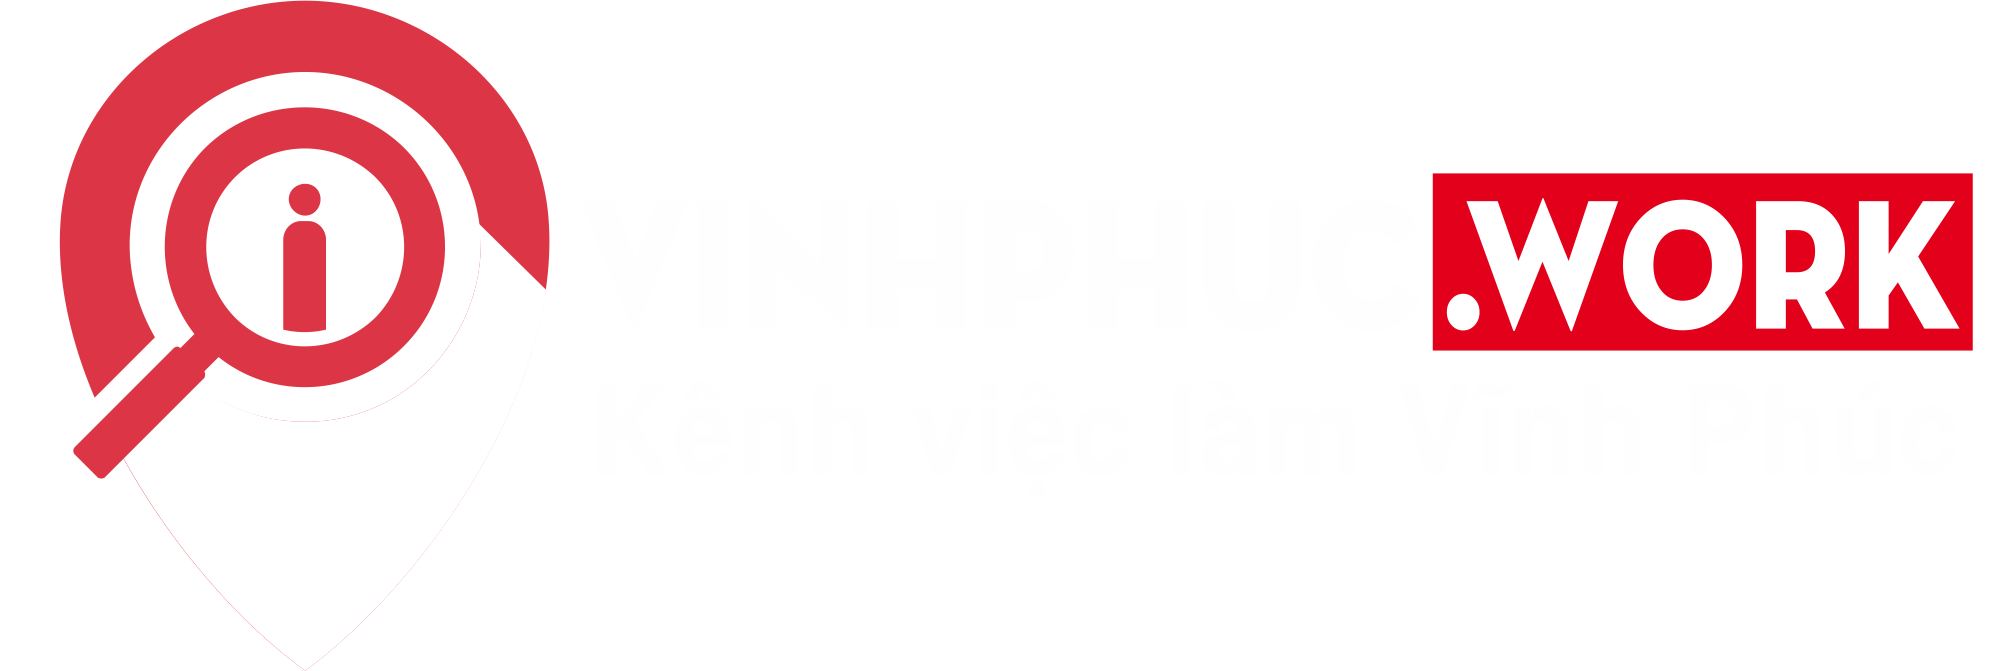 Logo Vinh Phuc Work Am Ban